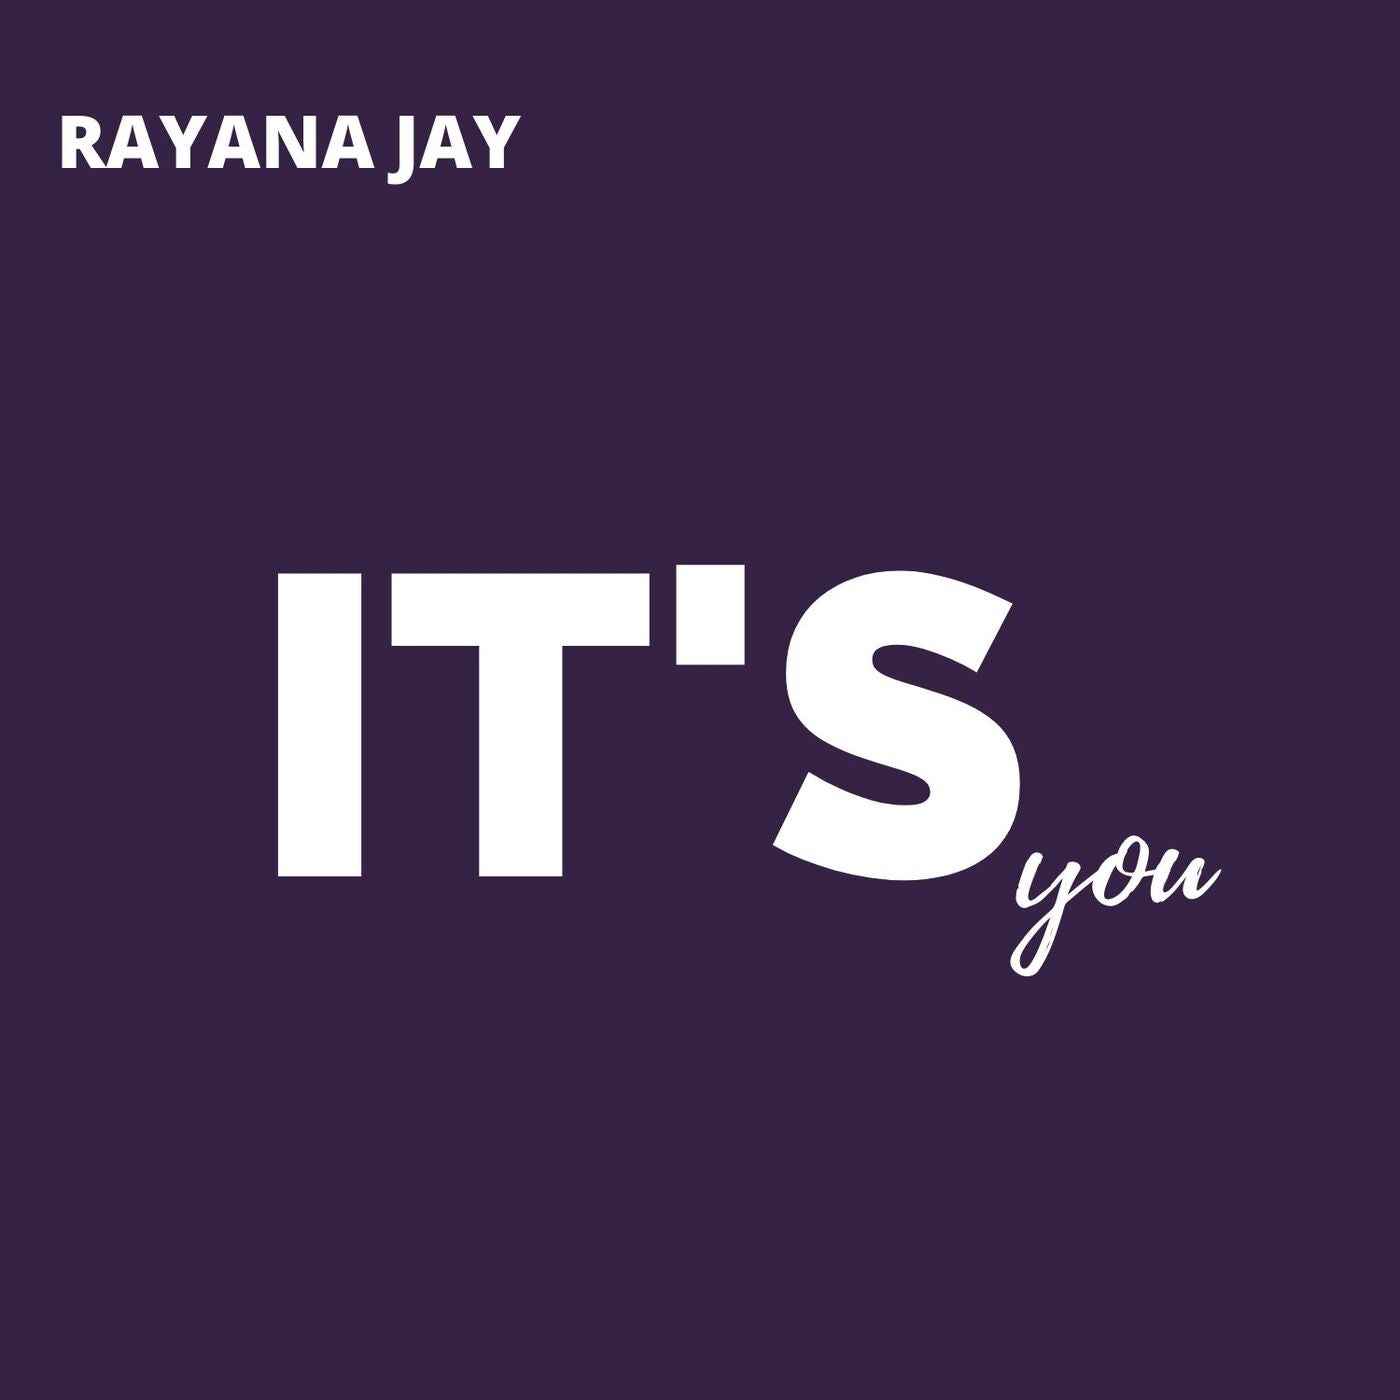 Jay me love rayana like - Search